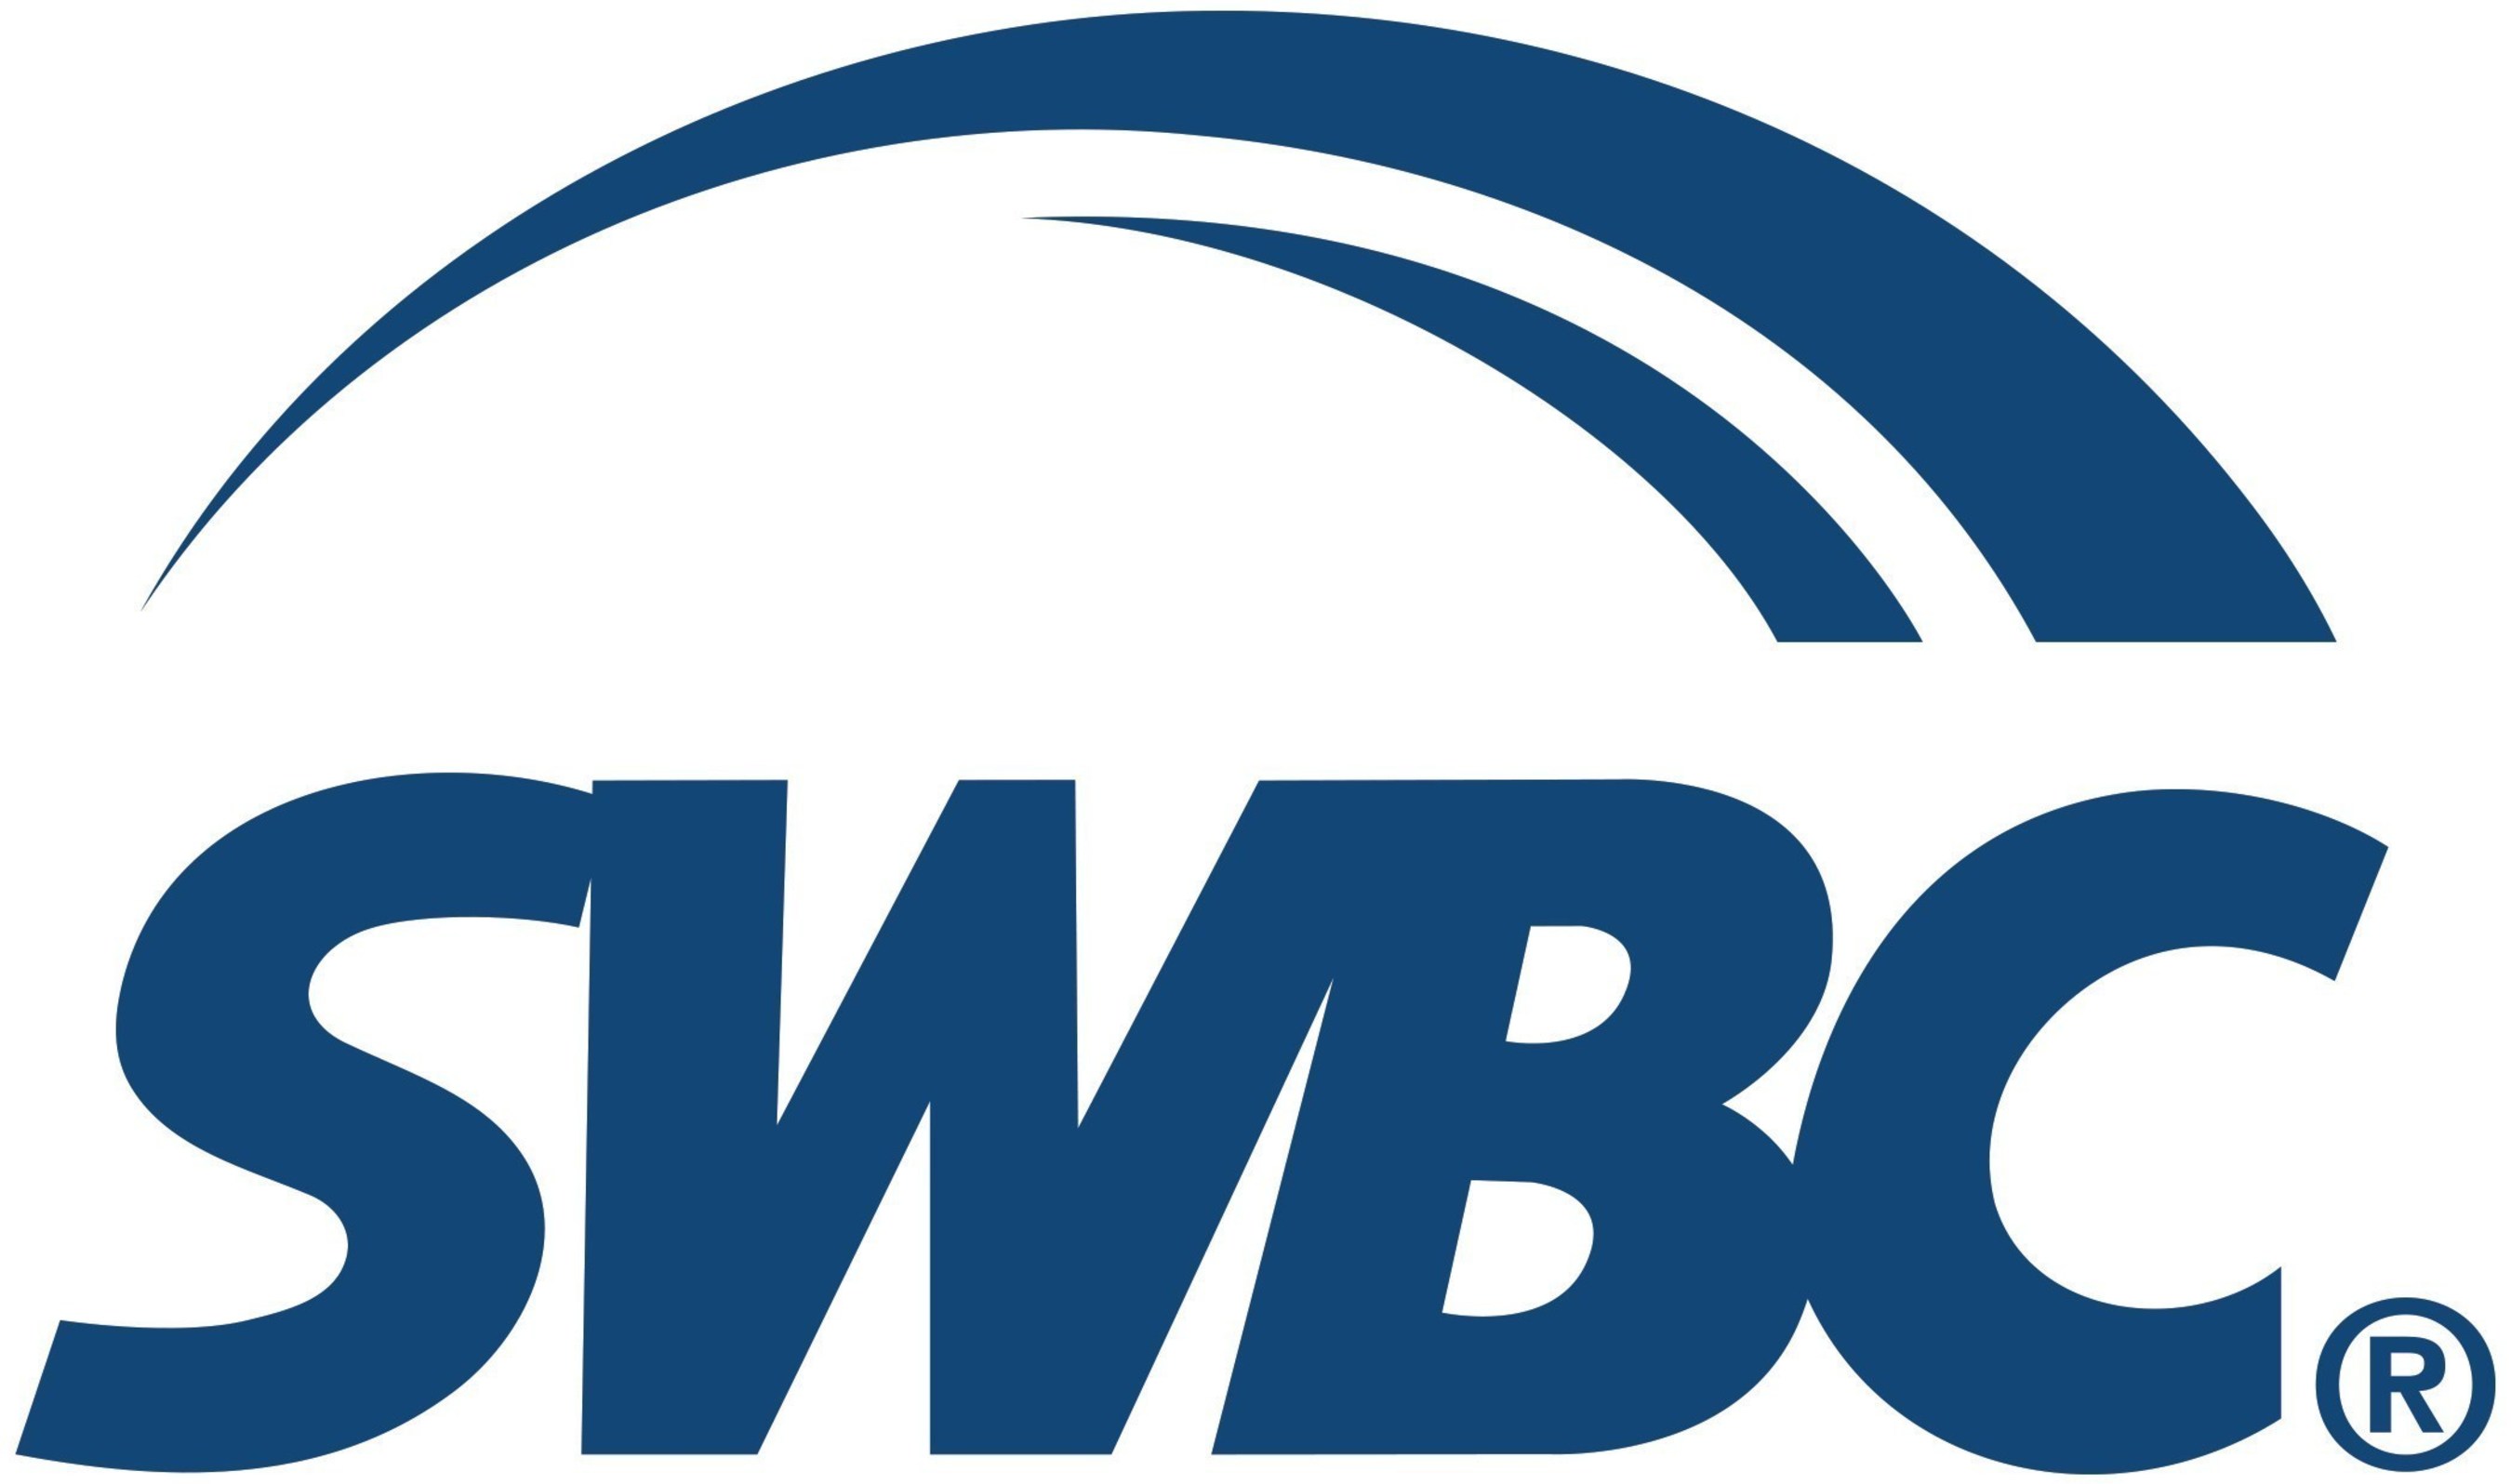 SWBC's Financial Institution Group Aligns with MoneyGram International